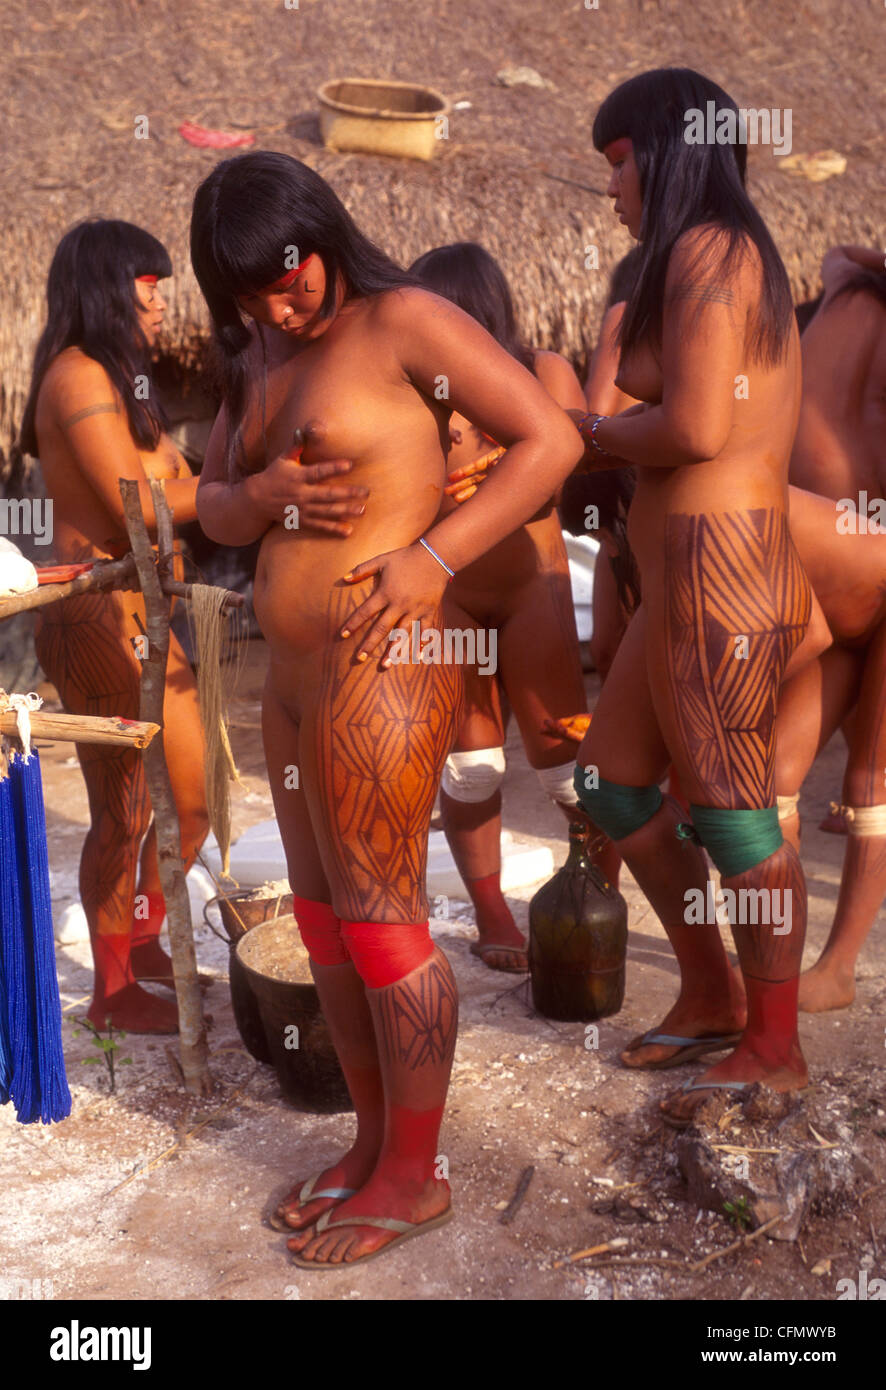 Amazon tribe sex porno fucking pictures